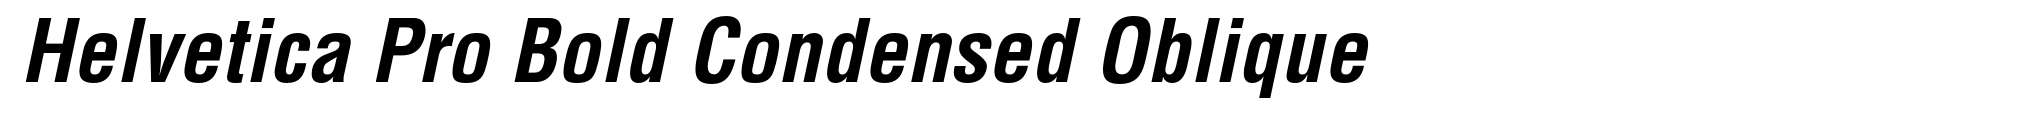 Helvetica Pro Bold Condensed Oblique image